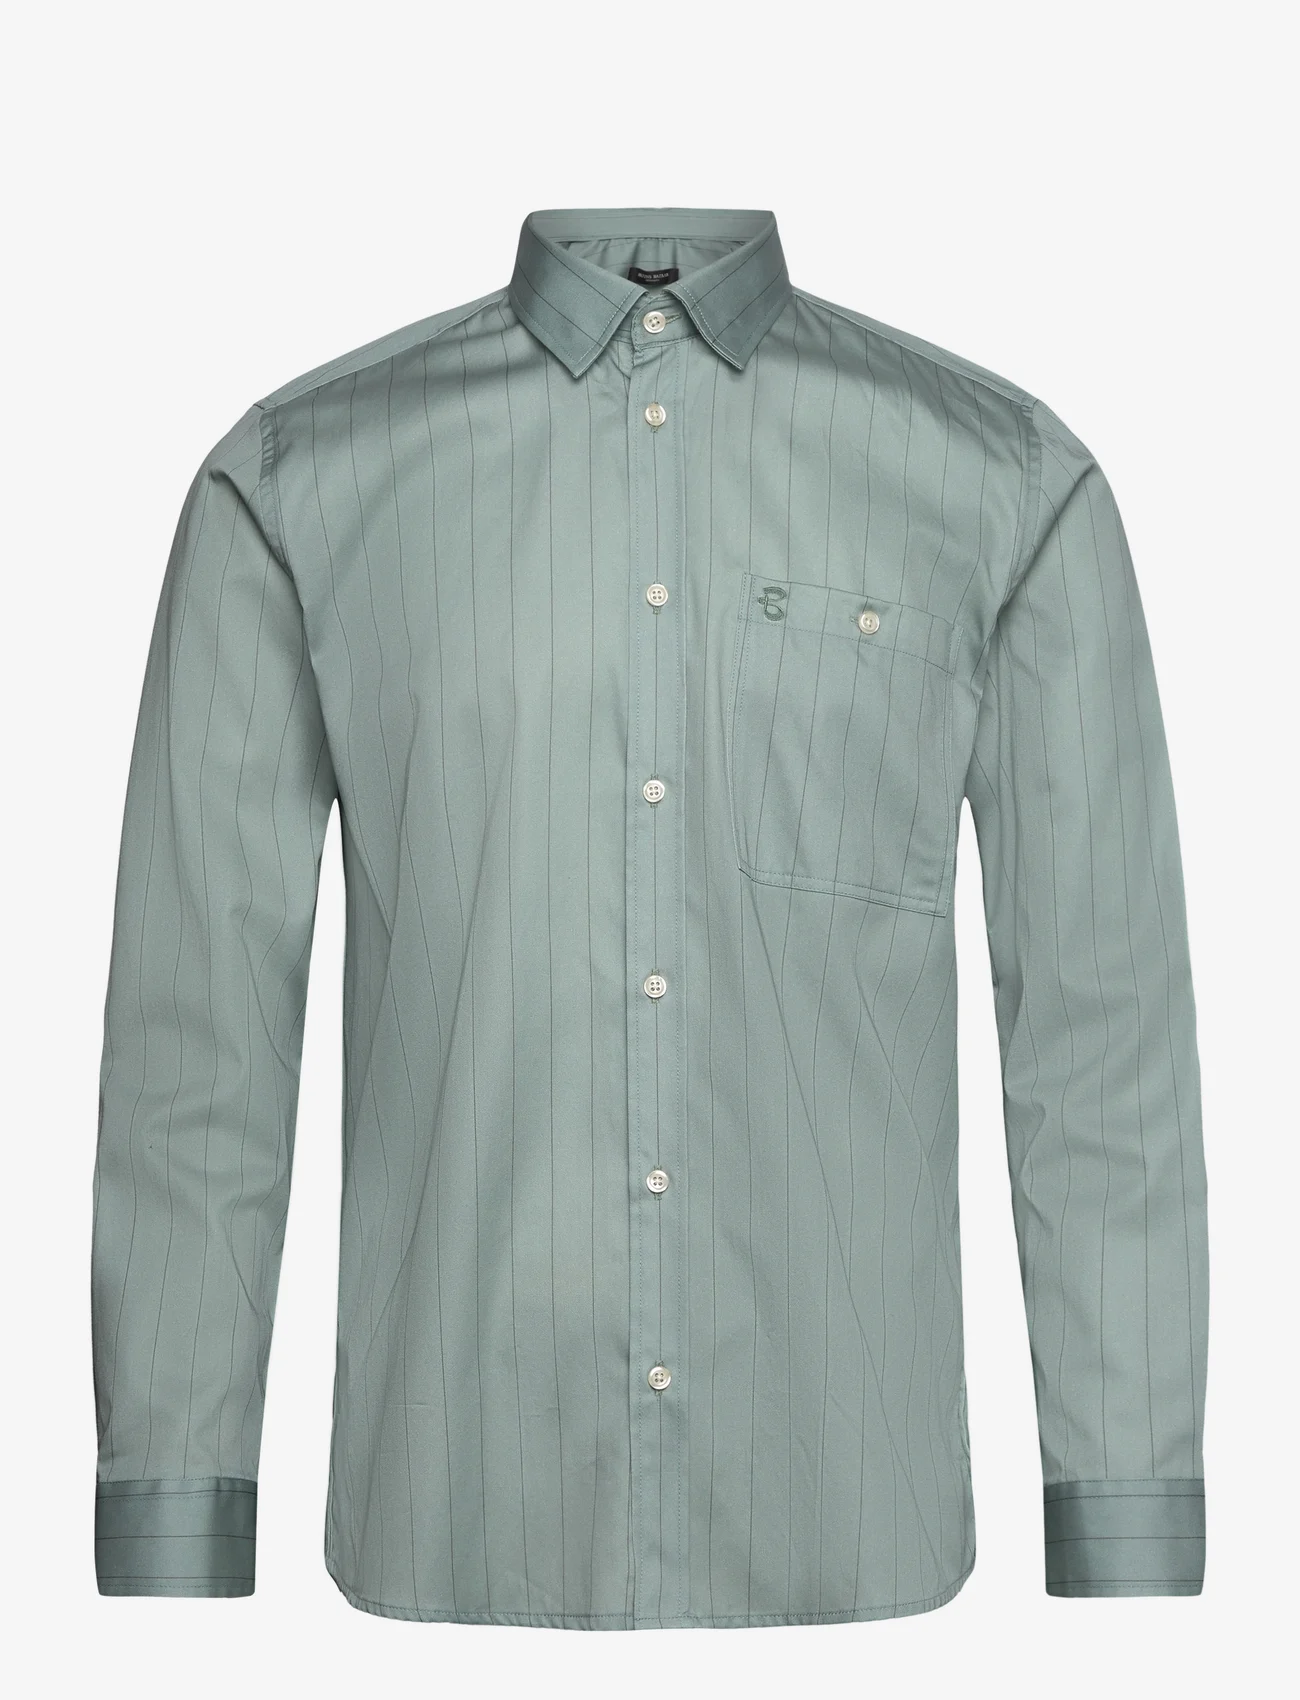 Bruuns Bazaar - SkyBBLorenzo shirt - business shirts - sage stripe - 0